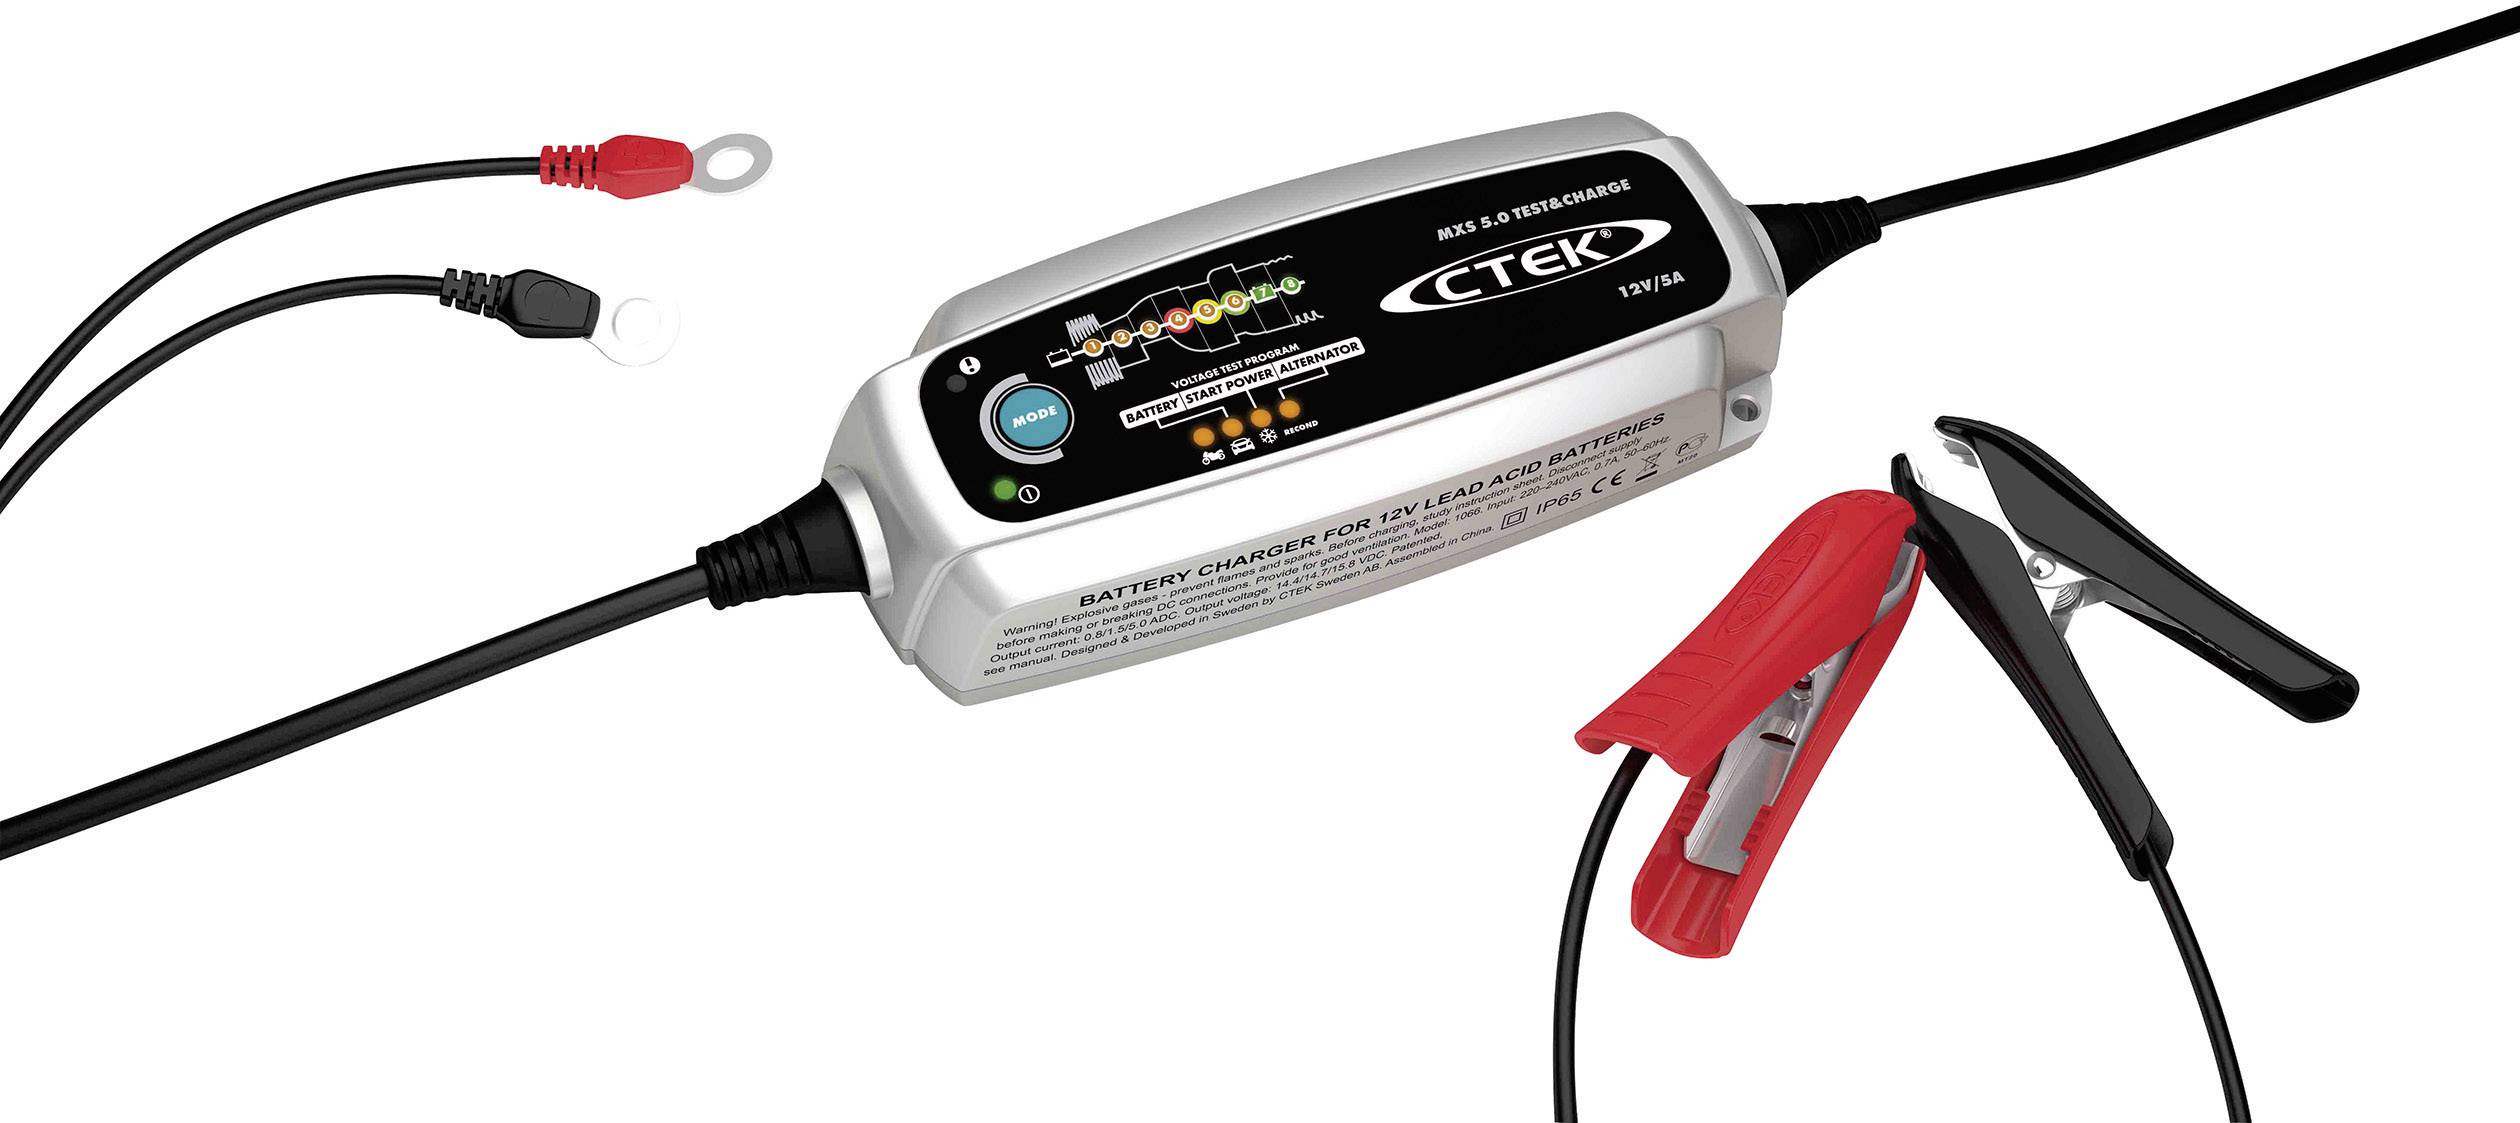 Acquista CTEK MXS 5.0 Test & Charge 56-882 Caricatore automatico